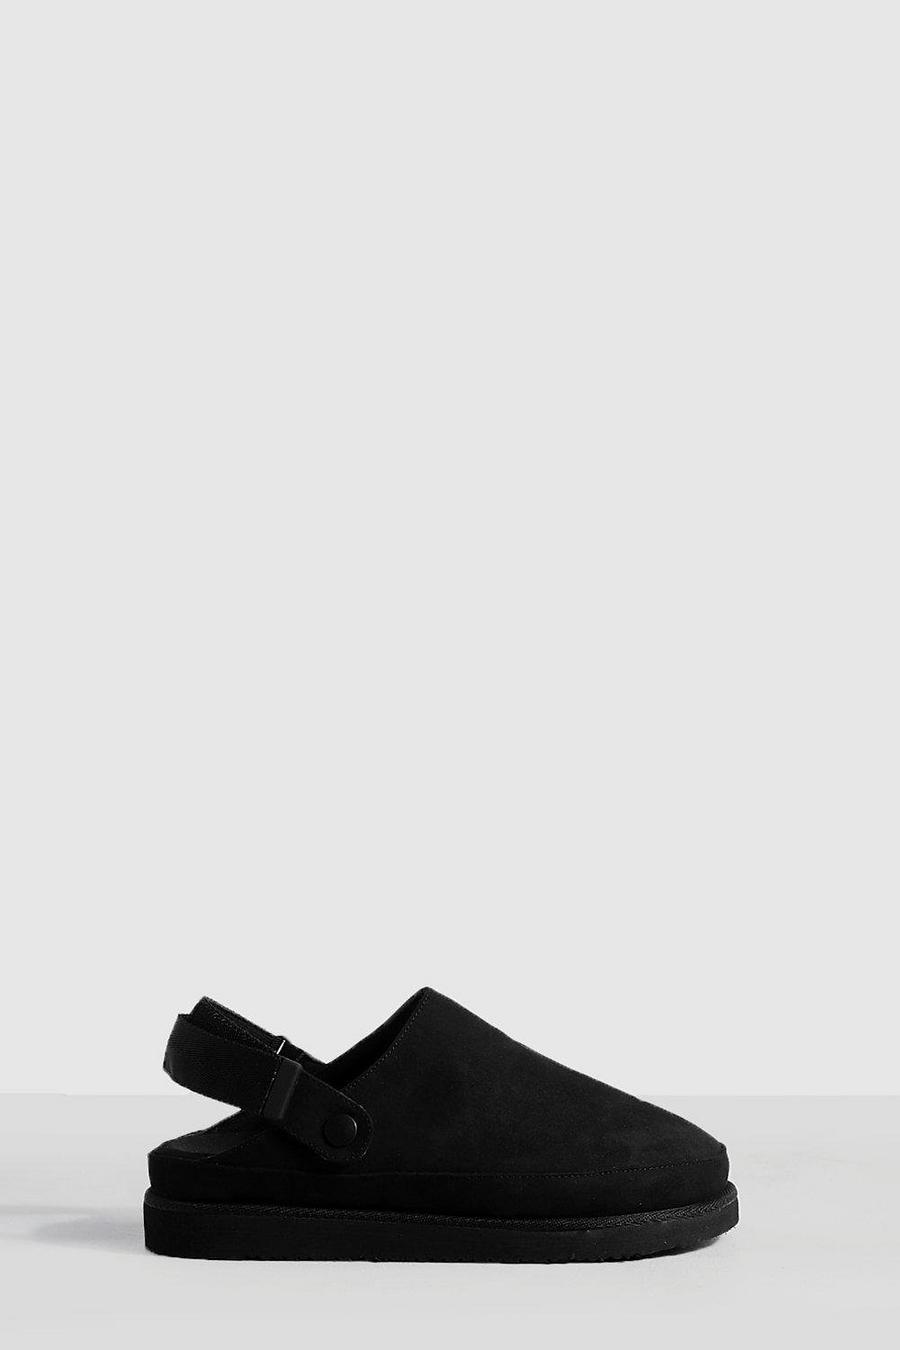 Black Chunky Slingback Nike Air Max 97 Women S Shoes Obsidian Gorge Grees